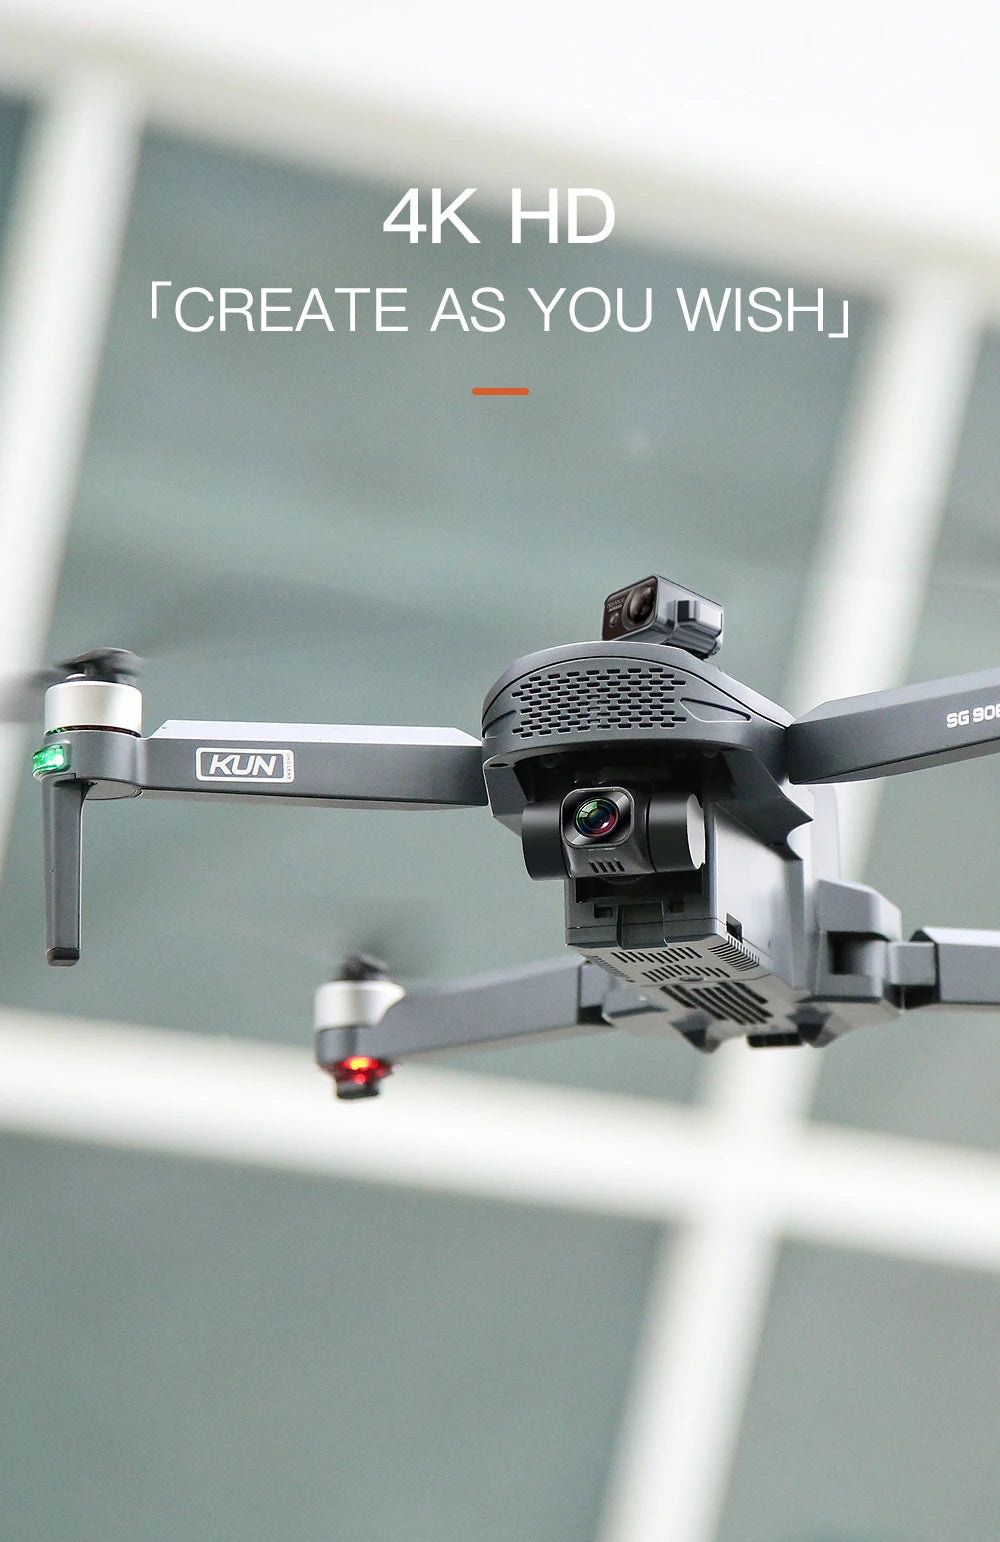 ZLL SG908 MAX Drone, three-axis self_ stabilizing gimbal tmachine anti-shake